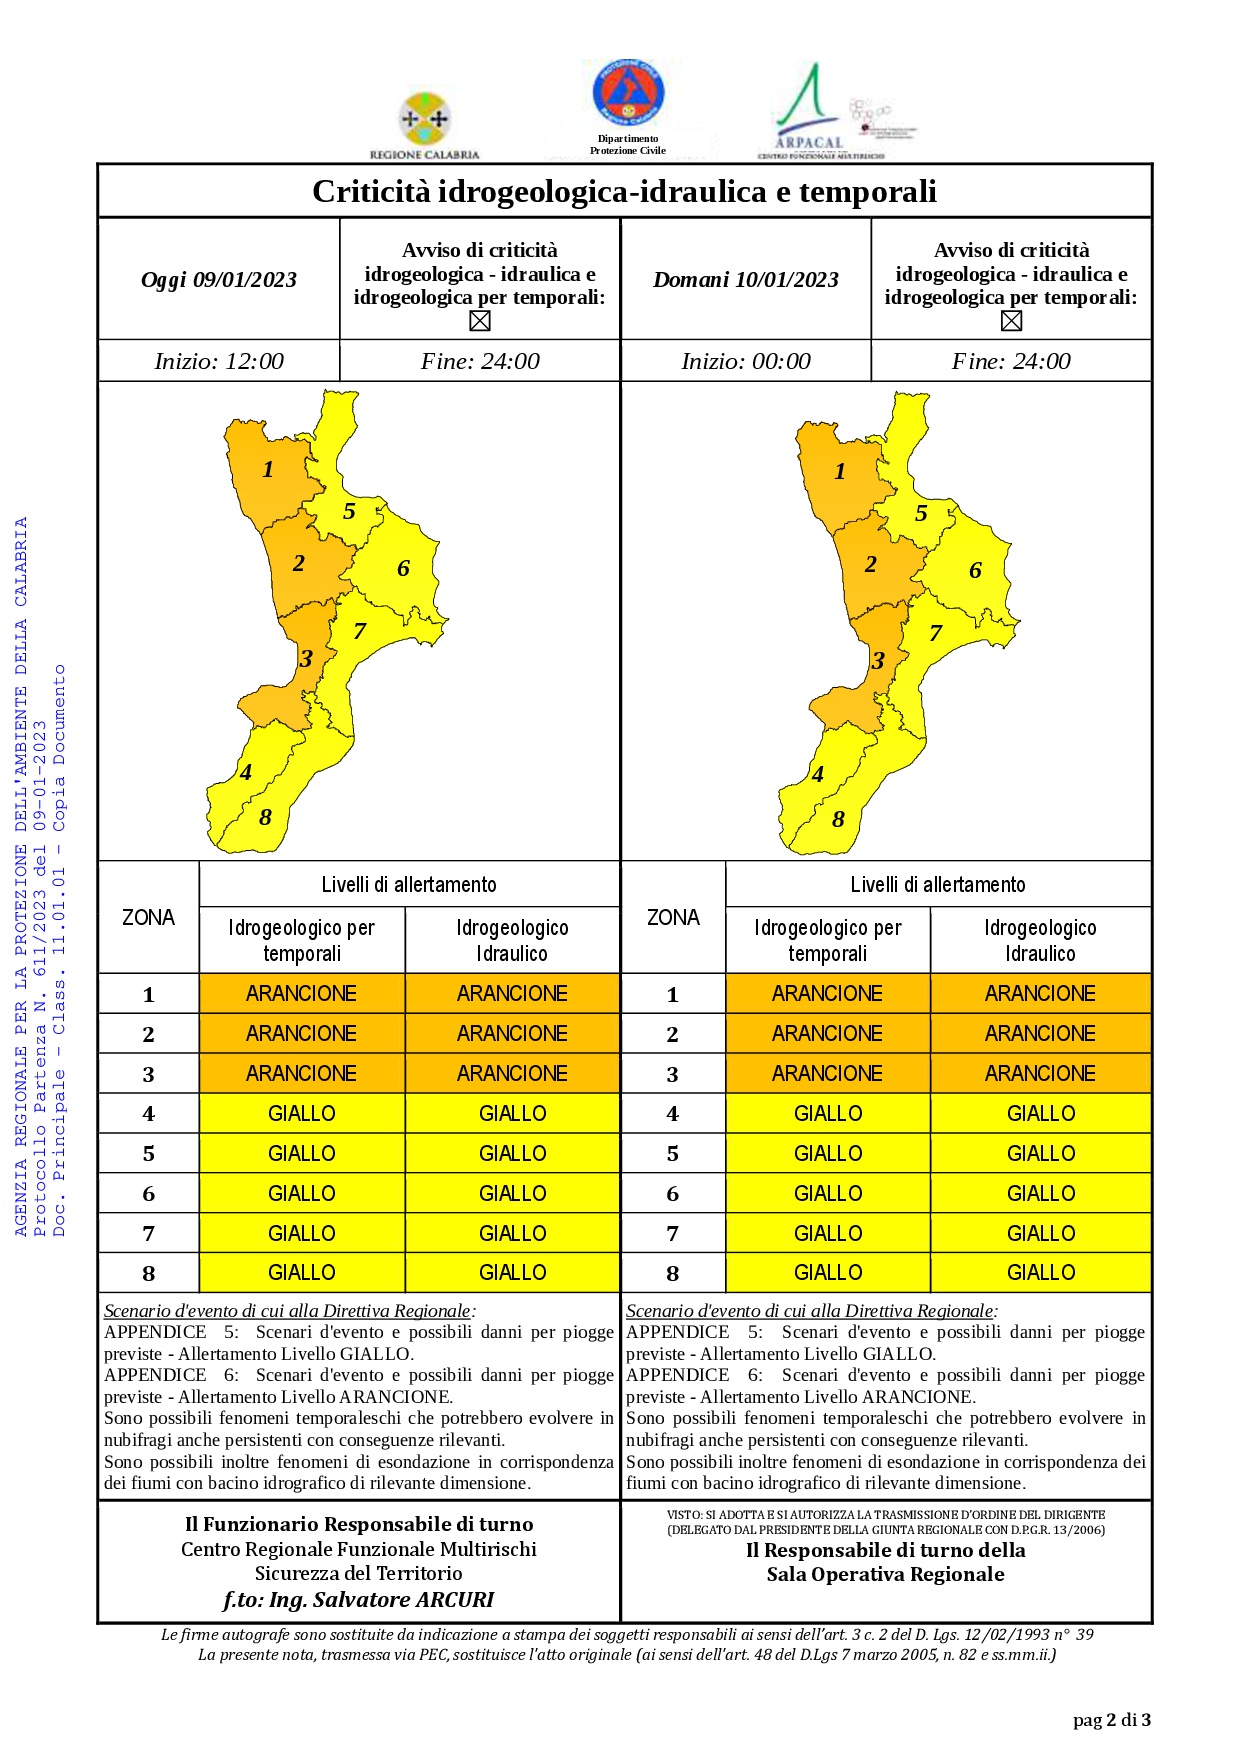 Criticità idrogeologica-idraulica e temporali in Calabria 09-01-2023